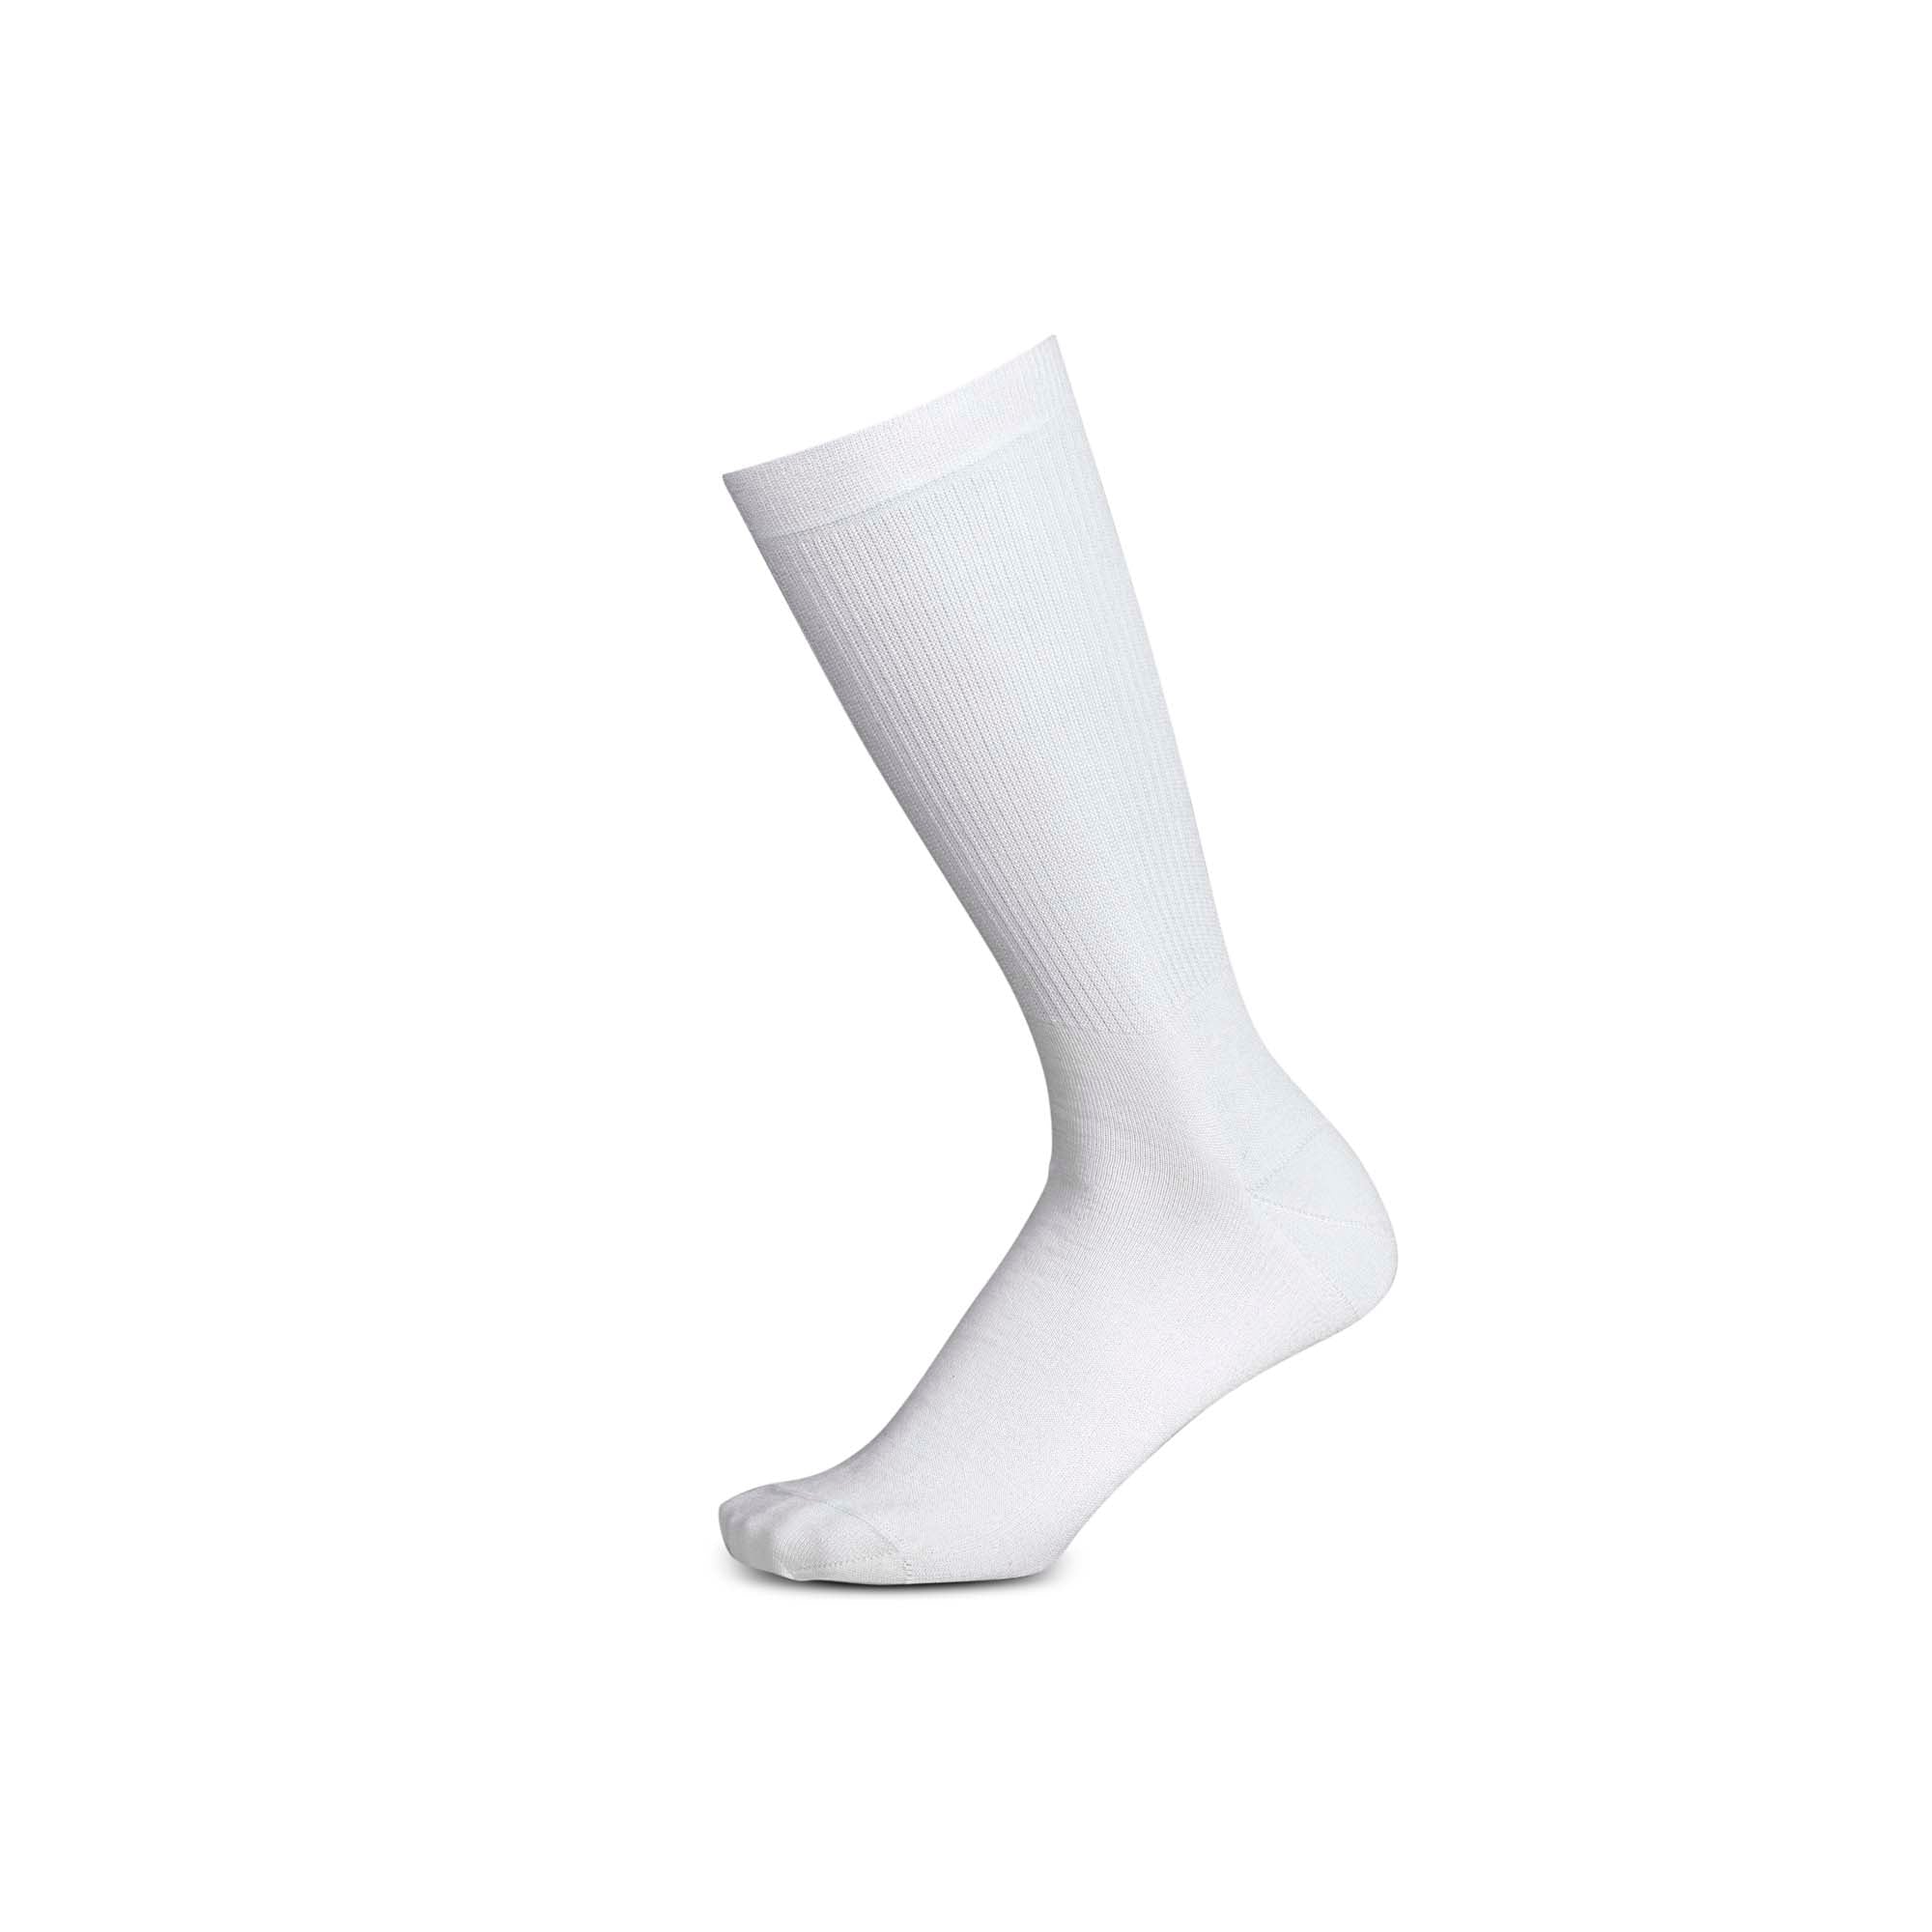 Sparco RW-4 Socks